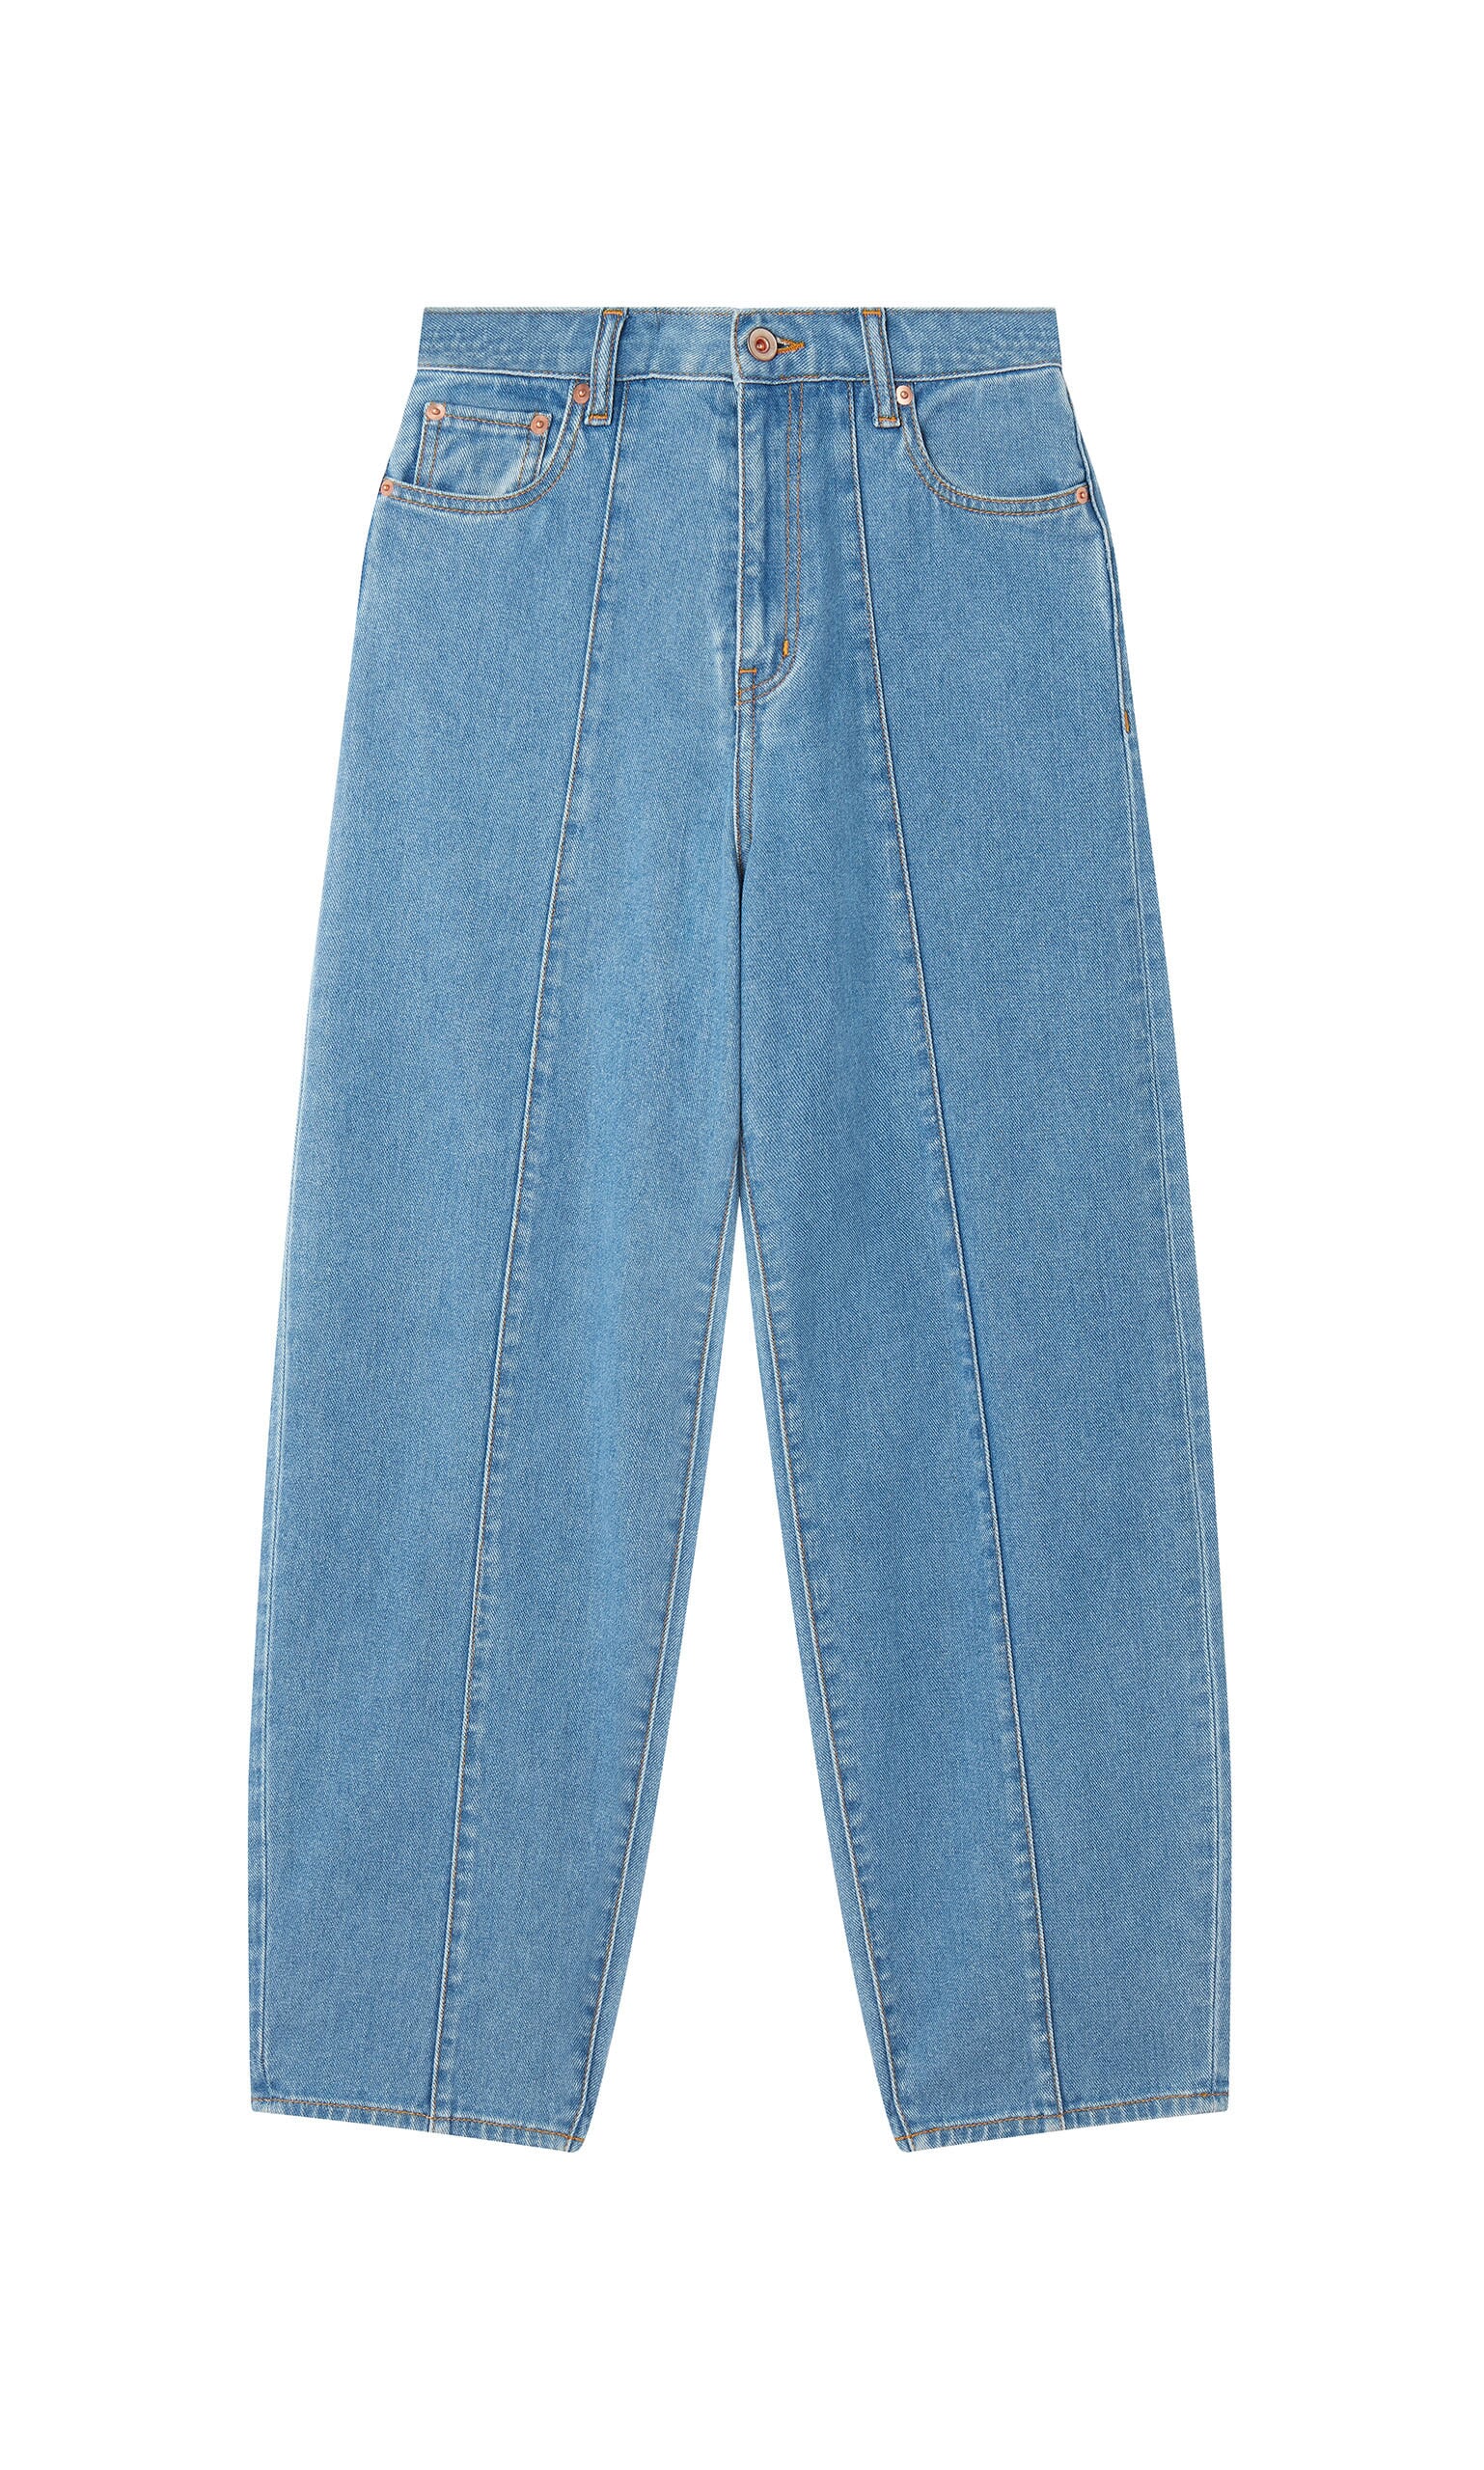 Medium bleached jeans - Plümo Ltd